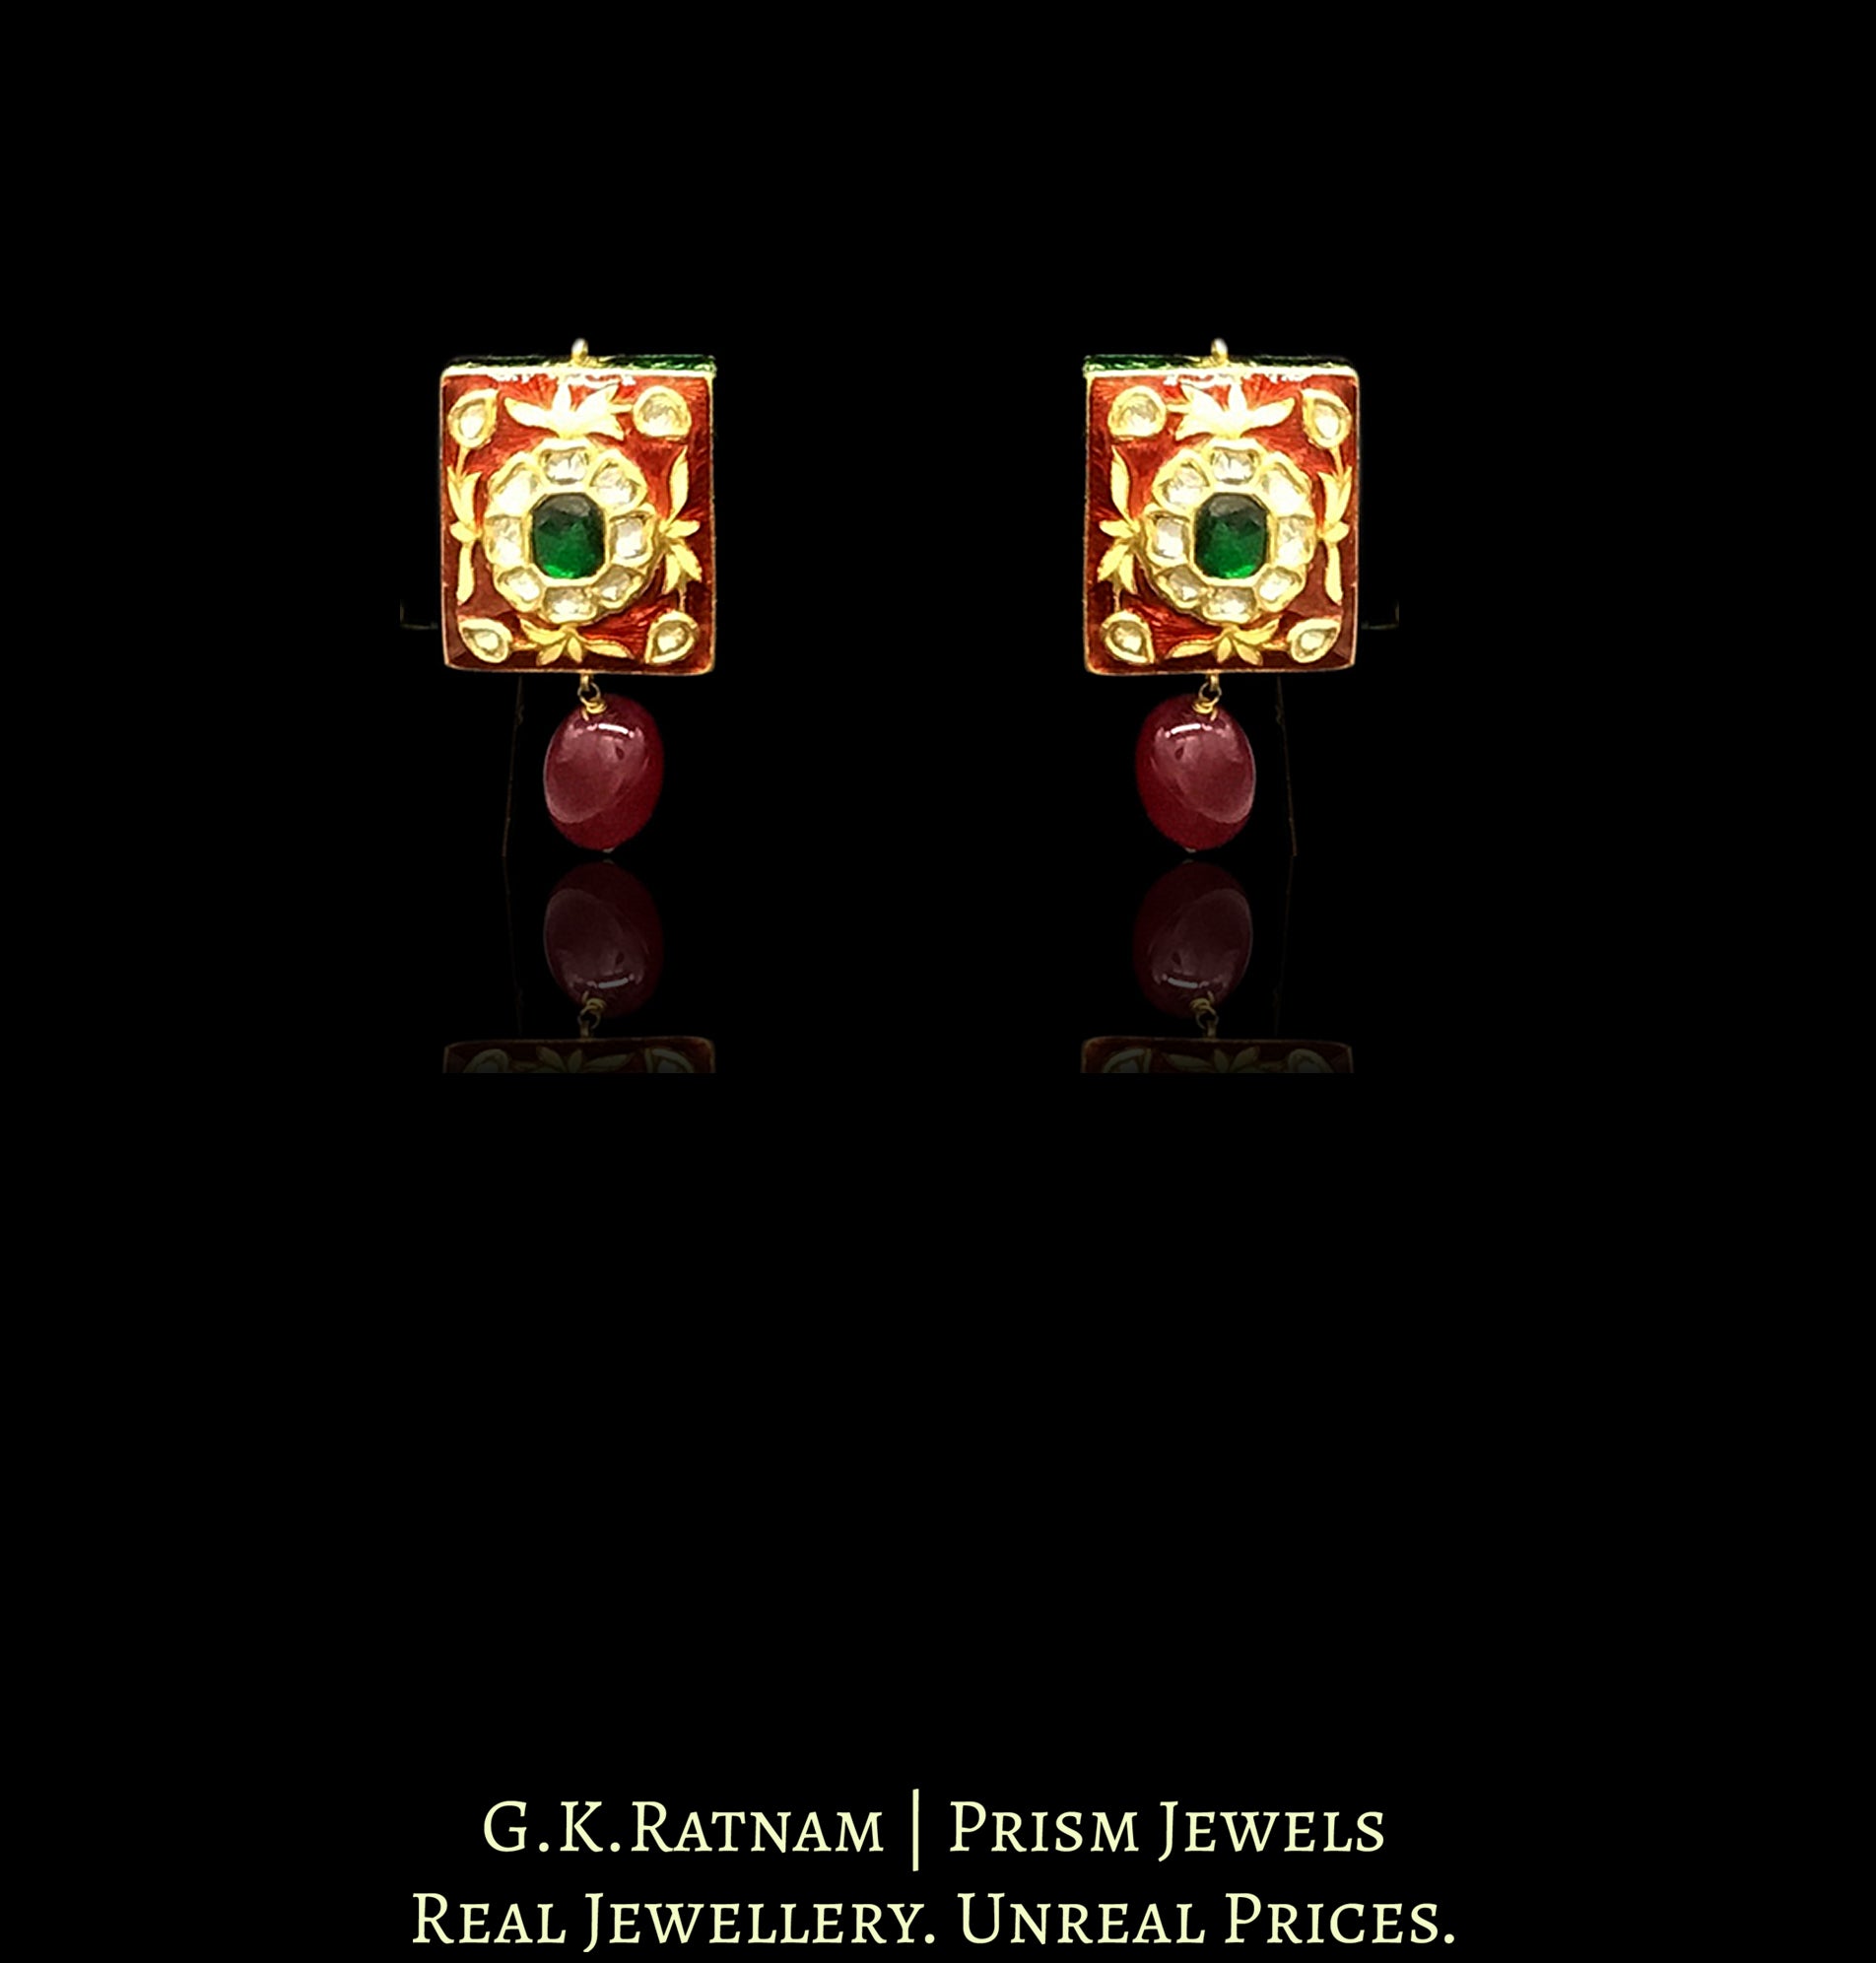 23k Gold and Diamond Polki square-shaped Pendant Set with bright red meenakari - G. K. Ratnam